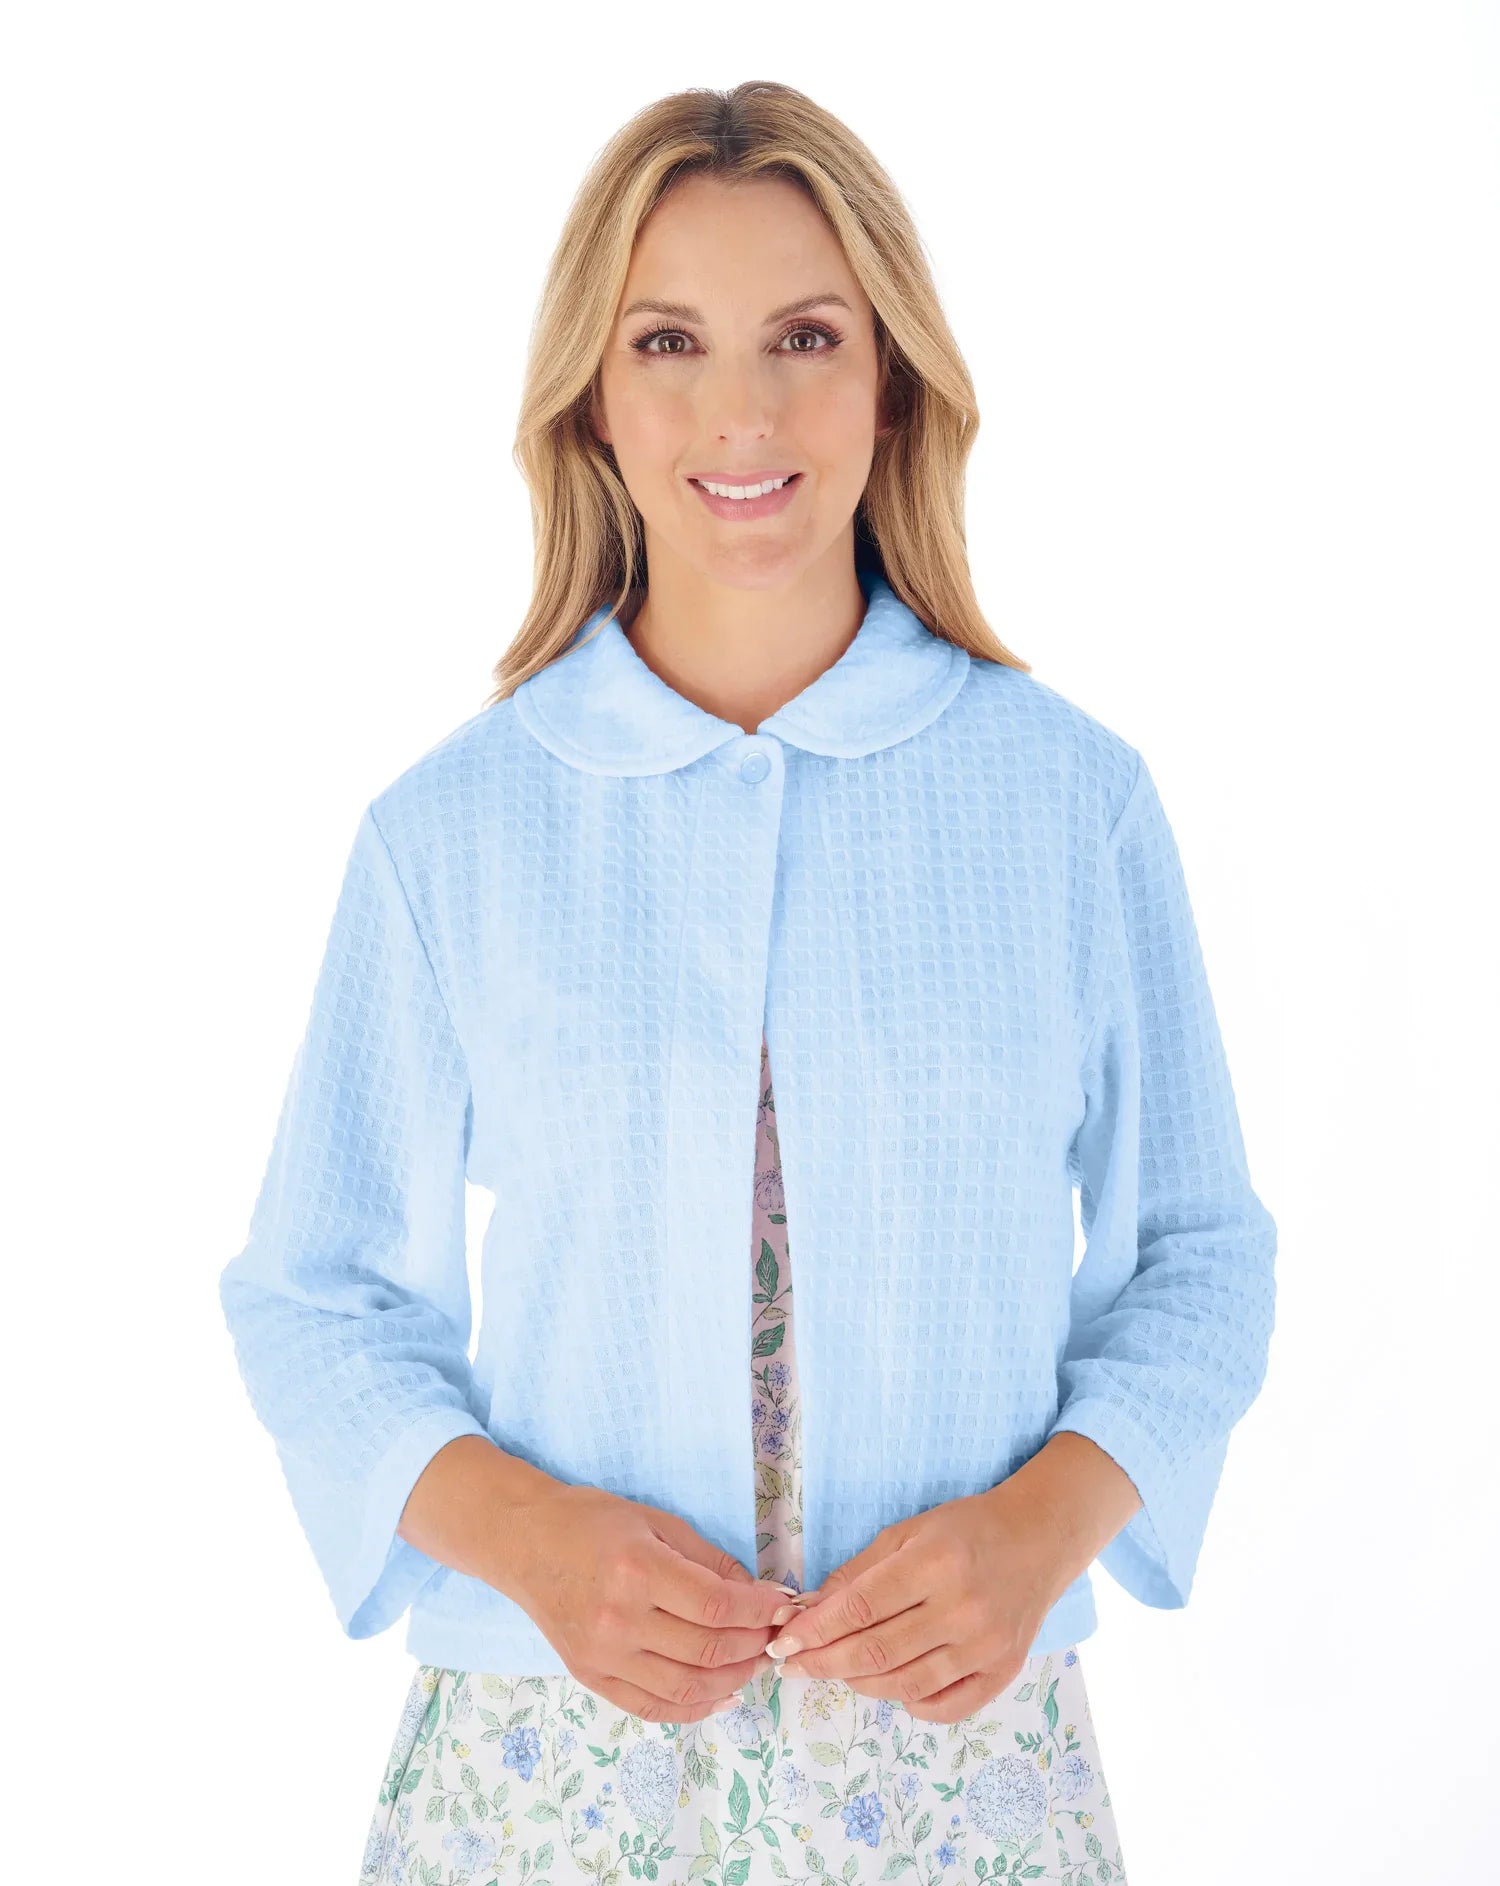 Slenderella Ladies Houndstooth Knit Button Top Bedjacket BJ3304 BLUE